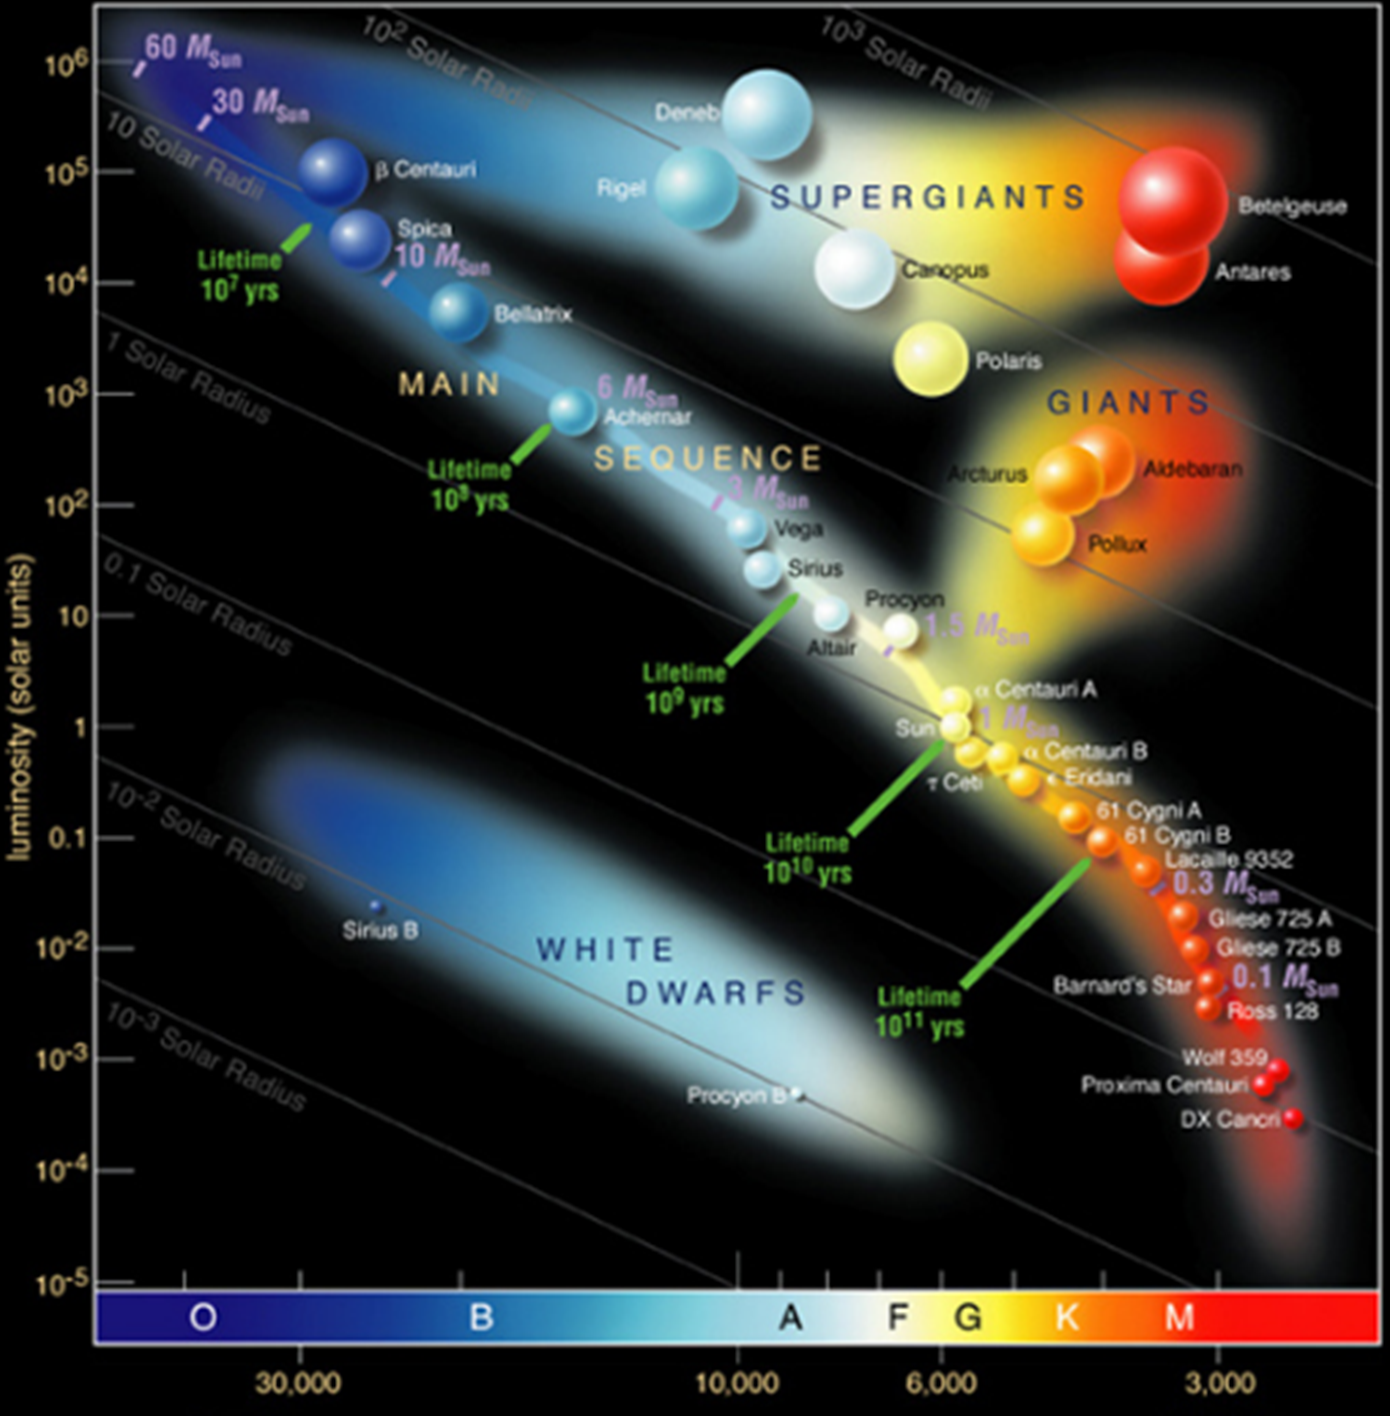 lassification bubble chart: Hertzsprung-Russell diagram of stellar evolution.